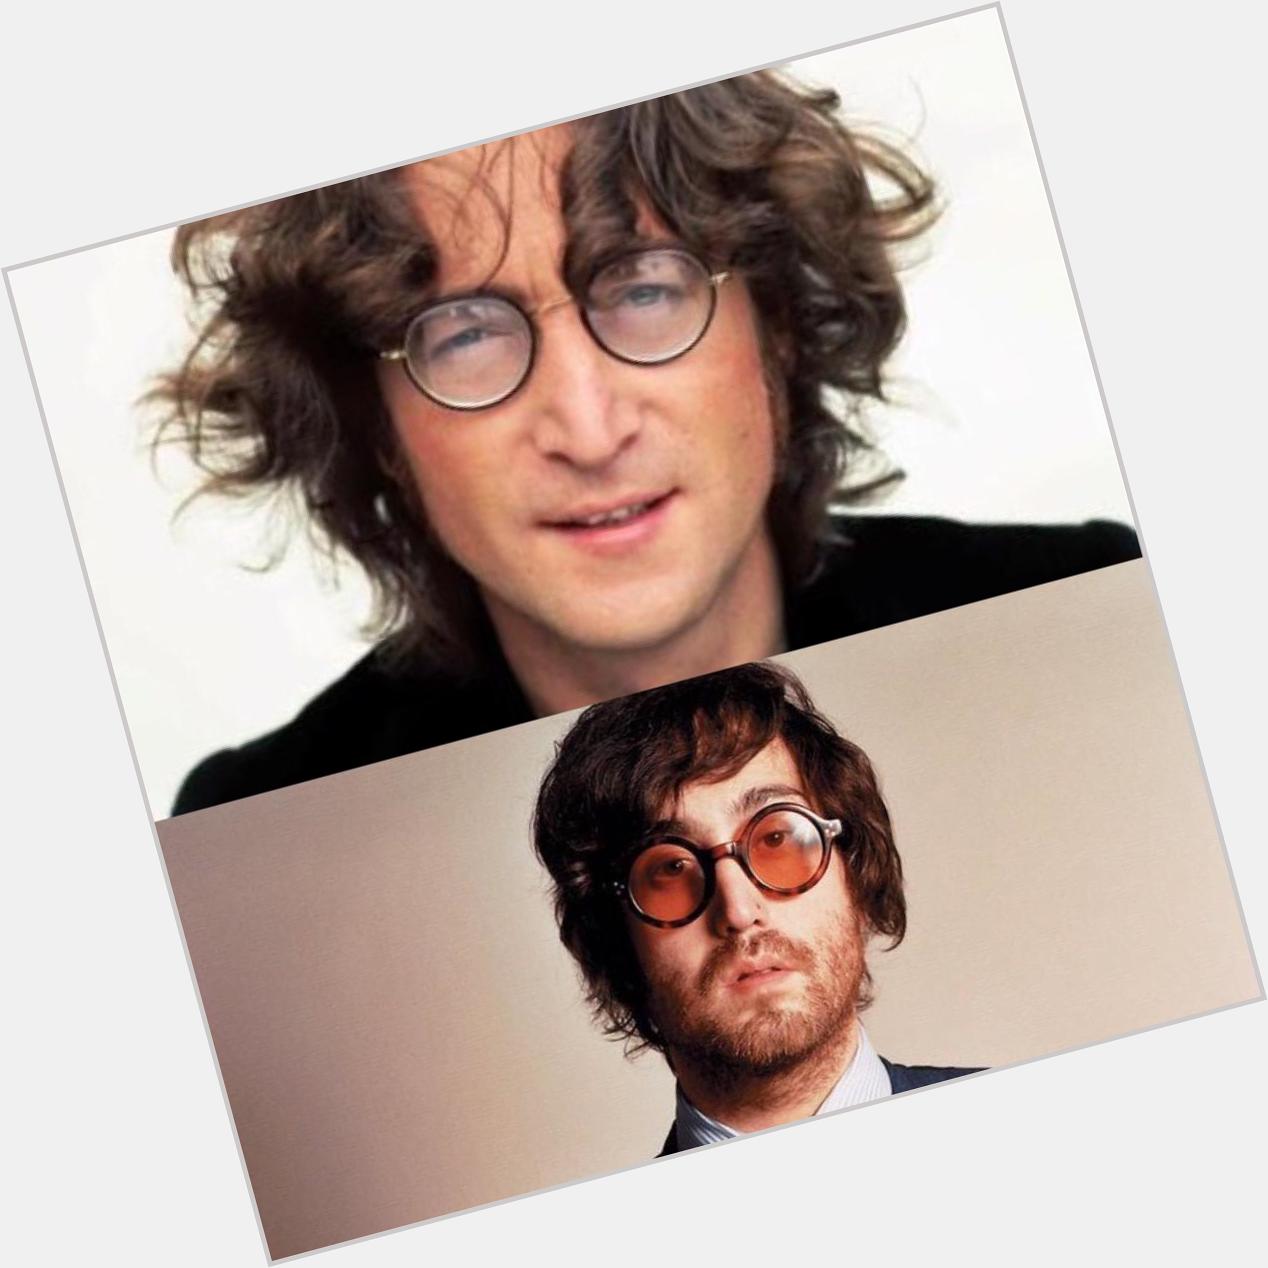 Happy Birthday October 9
John Lennon s 75th birthday
Sean Lennon s 40th birthday 